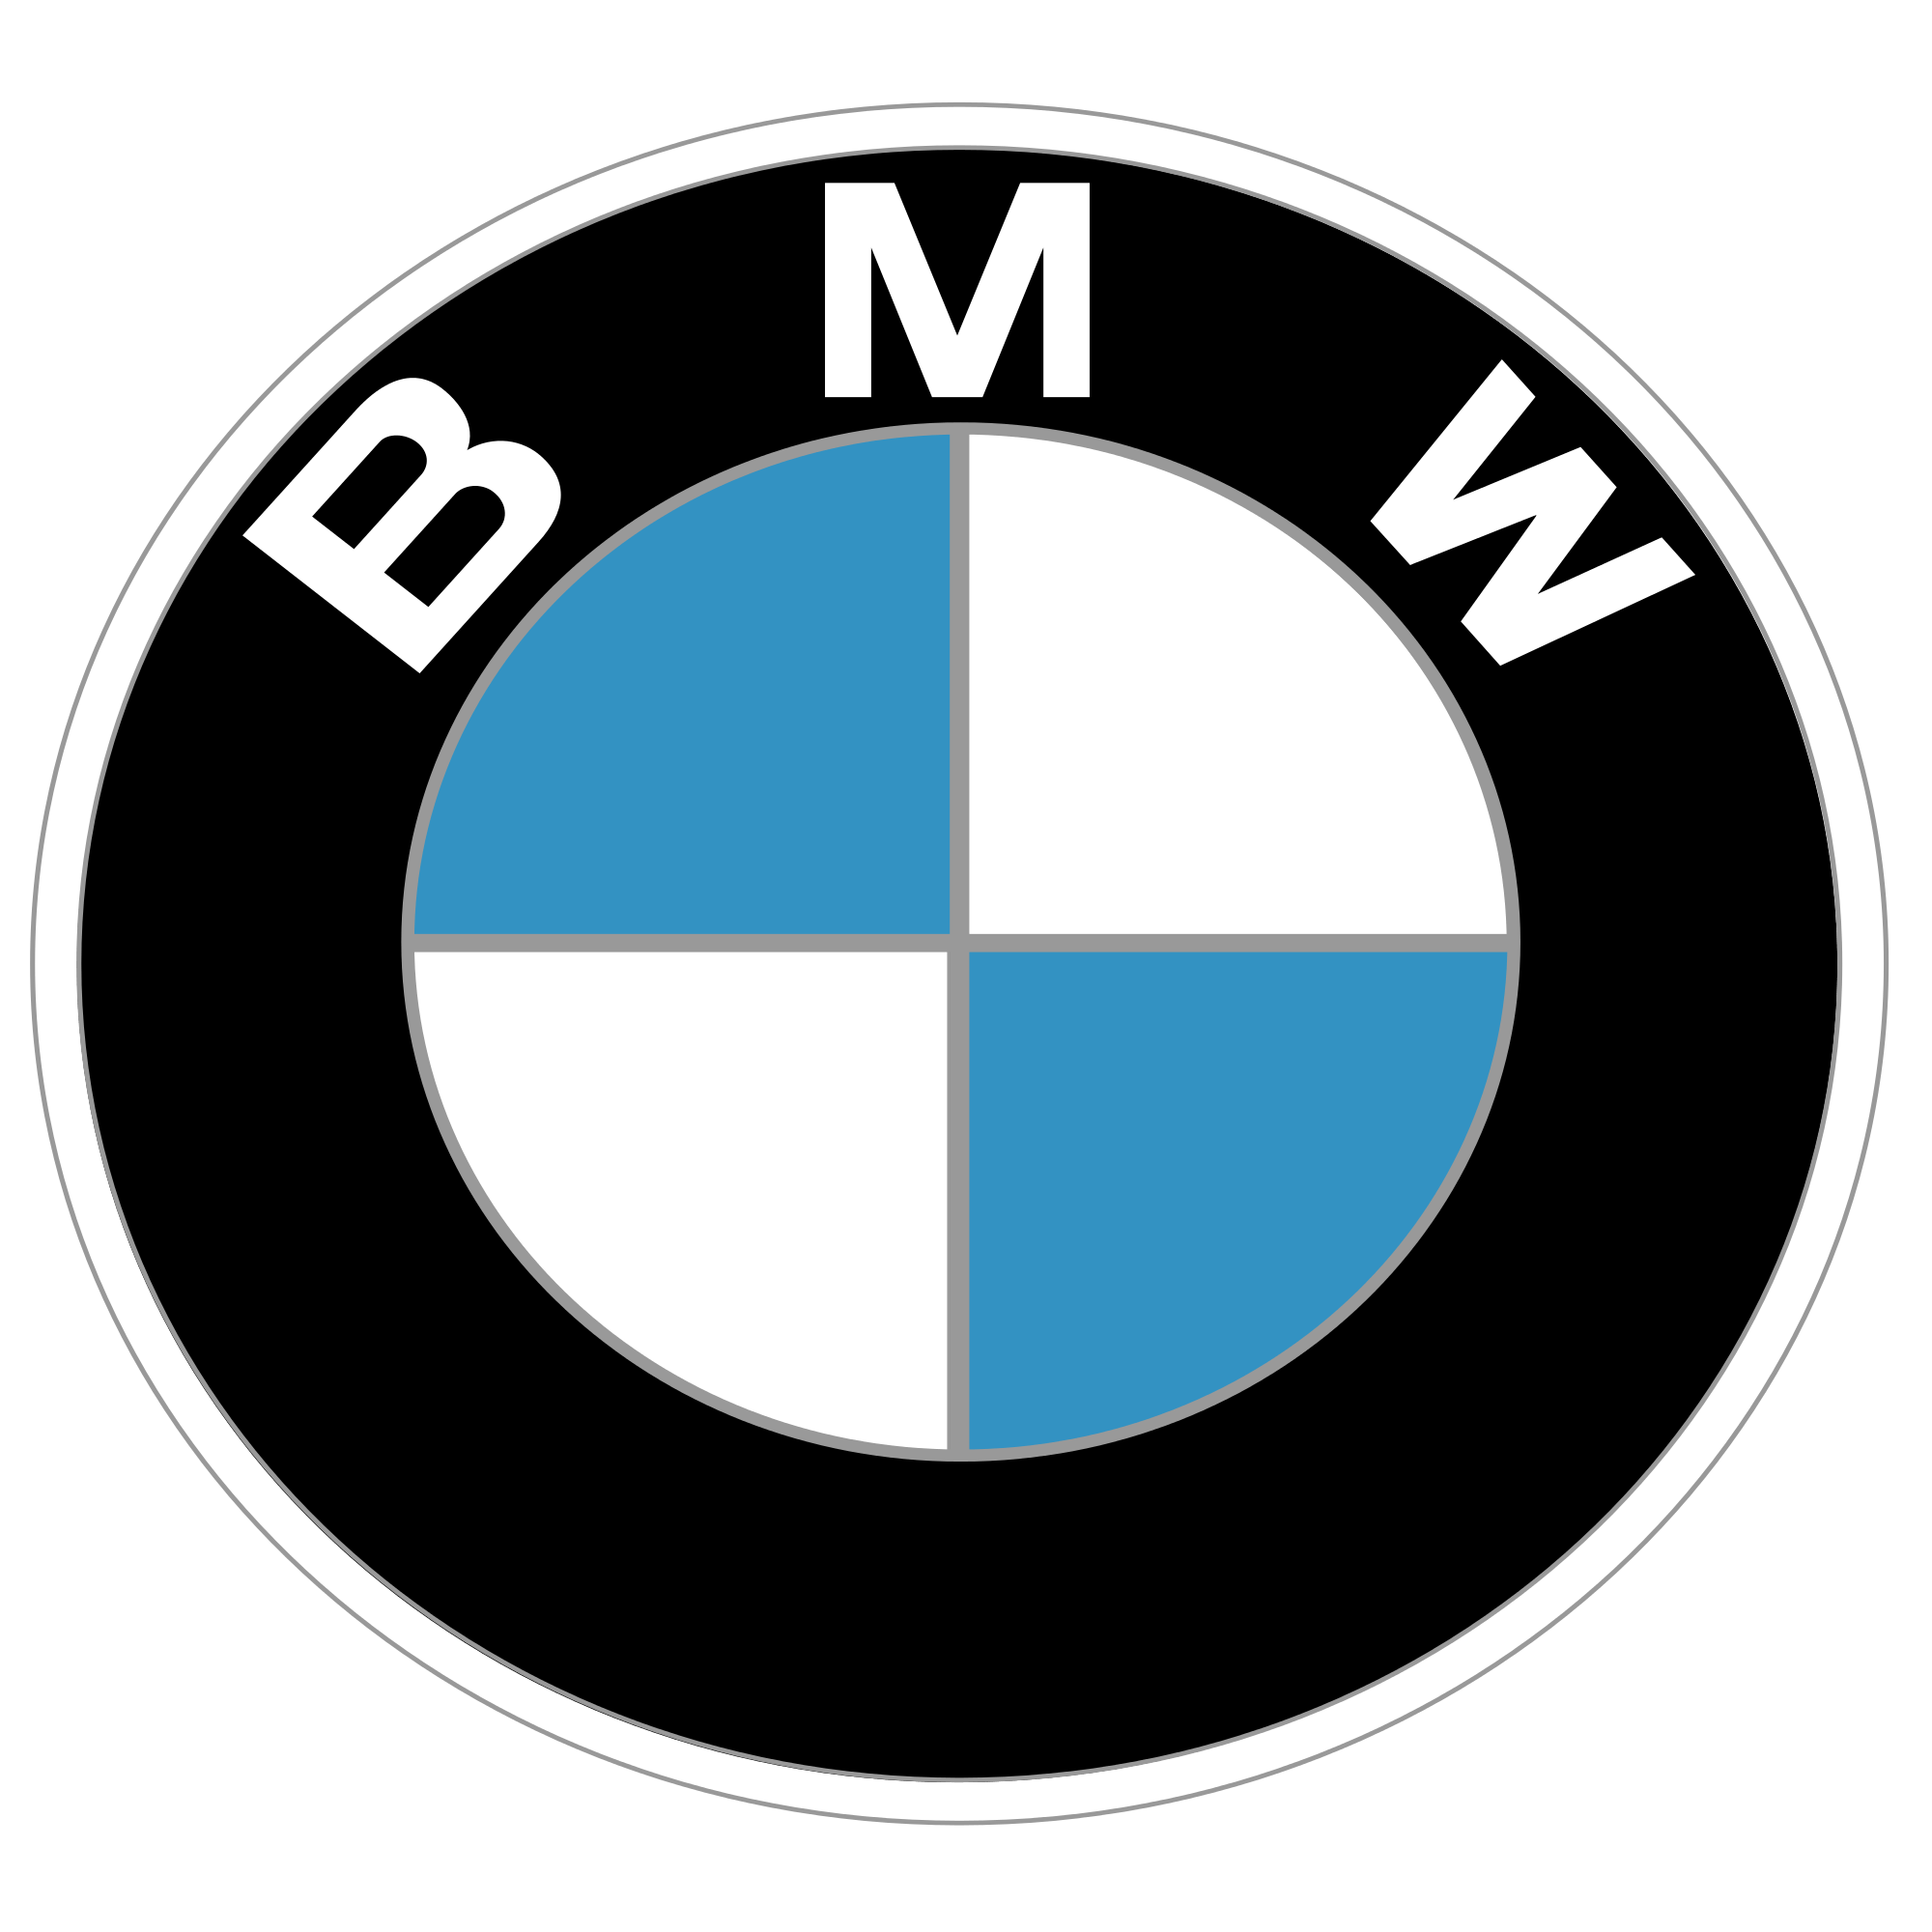 BWM Logo - File:BMW logo.svg - Wikimedia Commons